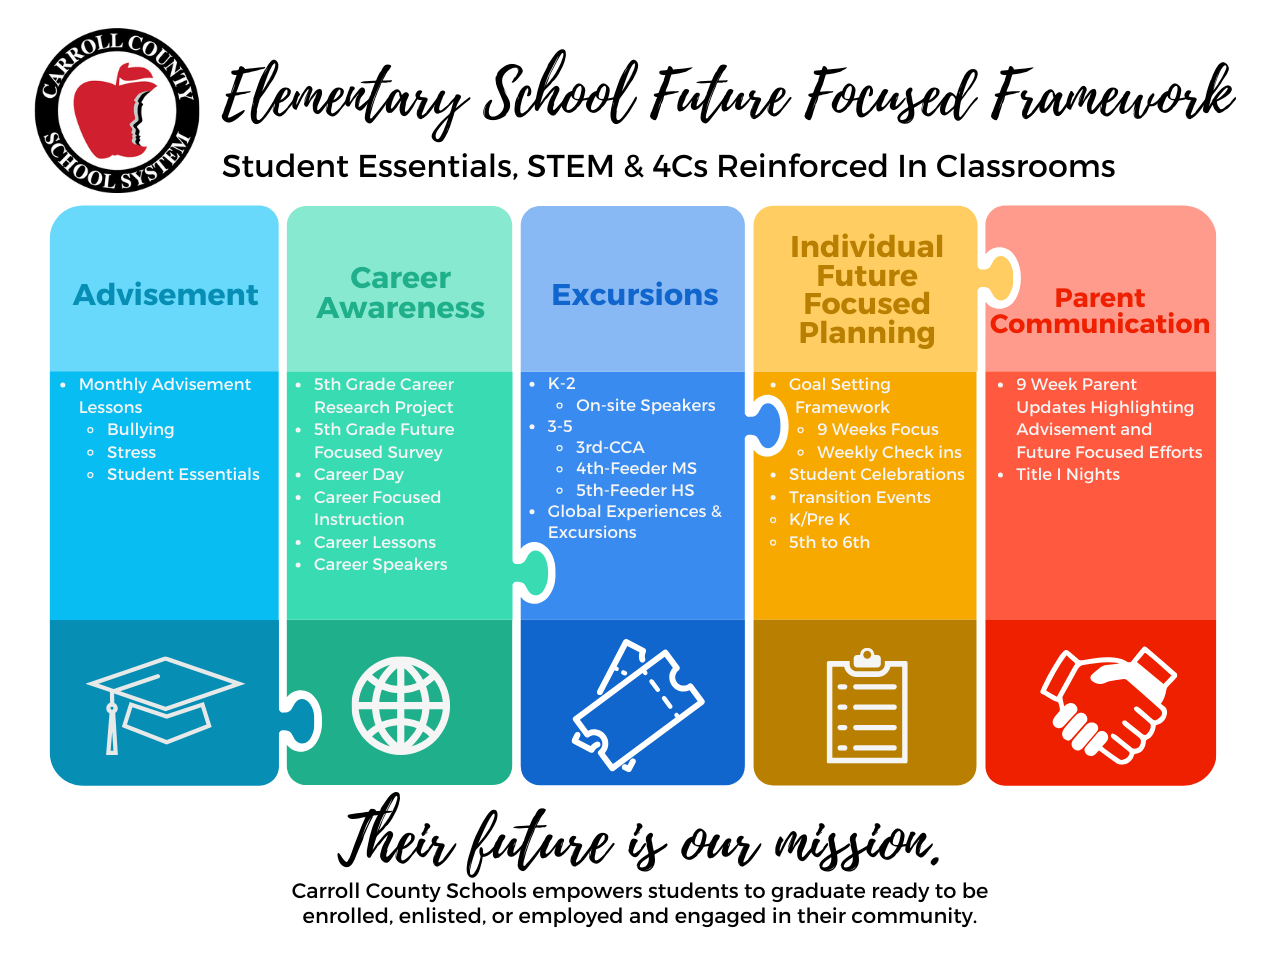 Elementary School Future Focused Framework